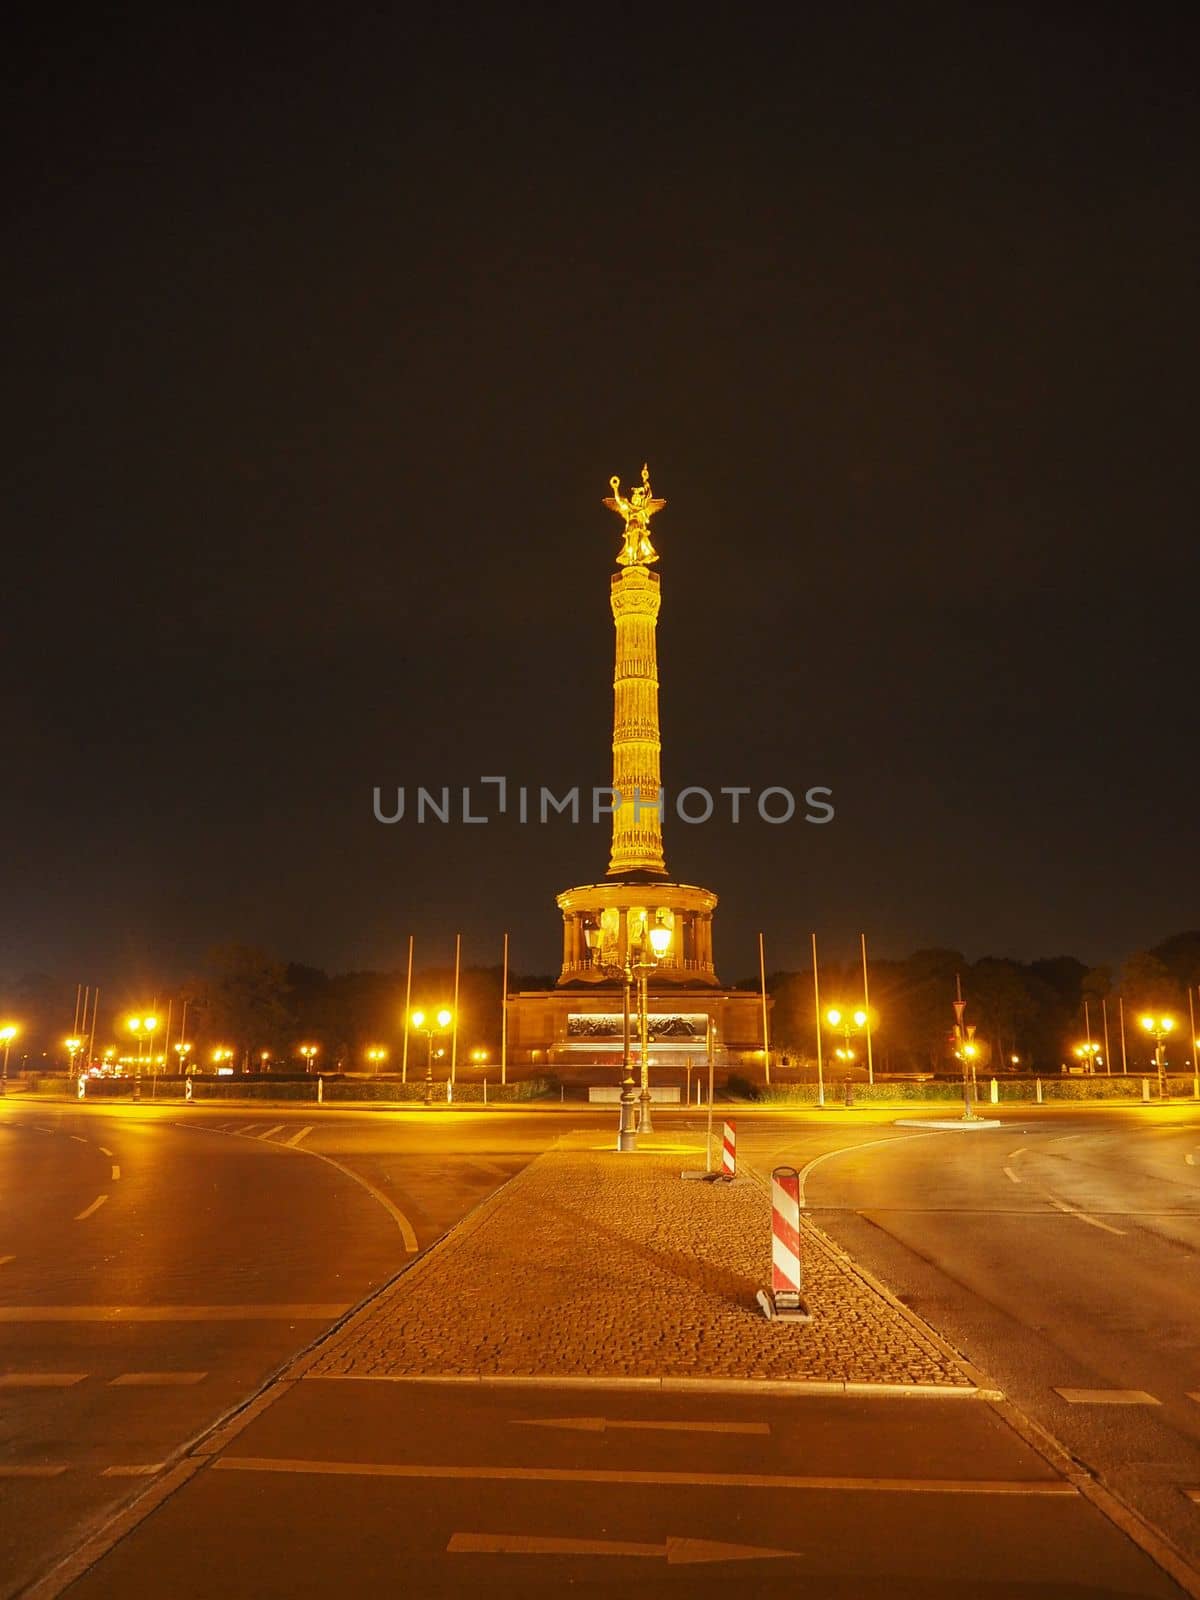 Angel statue aka Siegessaeule (meaning Victory Column) in Tiergarten park in Berlin, Germany at night